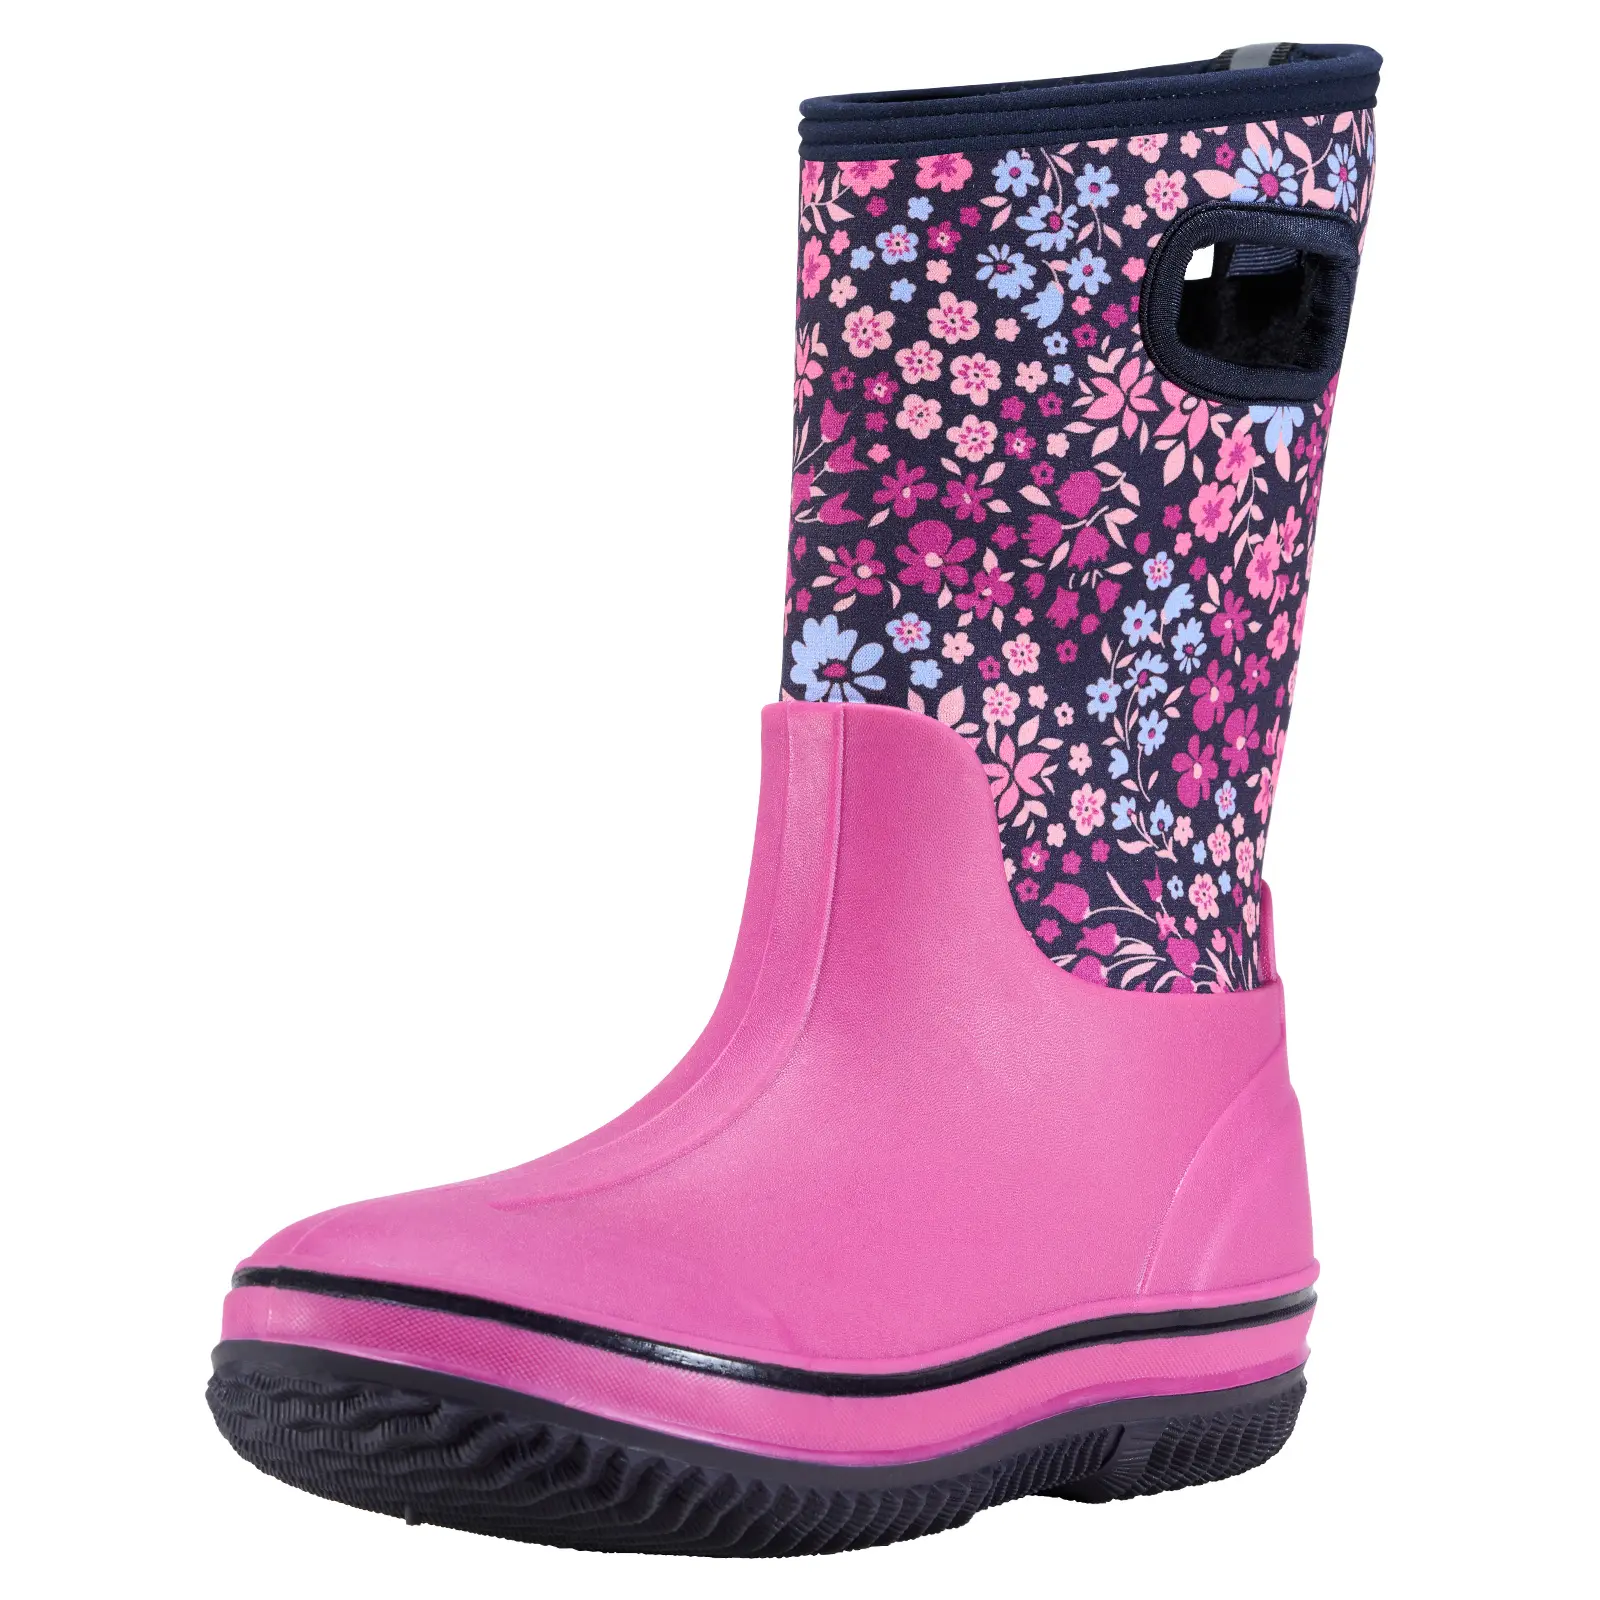 HISEA Kids Rain Boots Waterproof Insulated Rubber Neoprene Boots